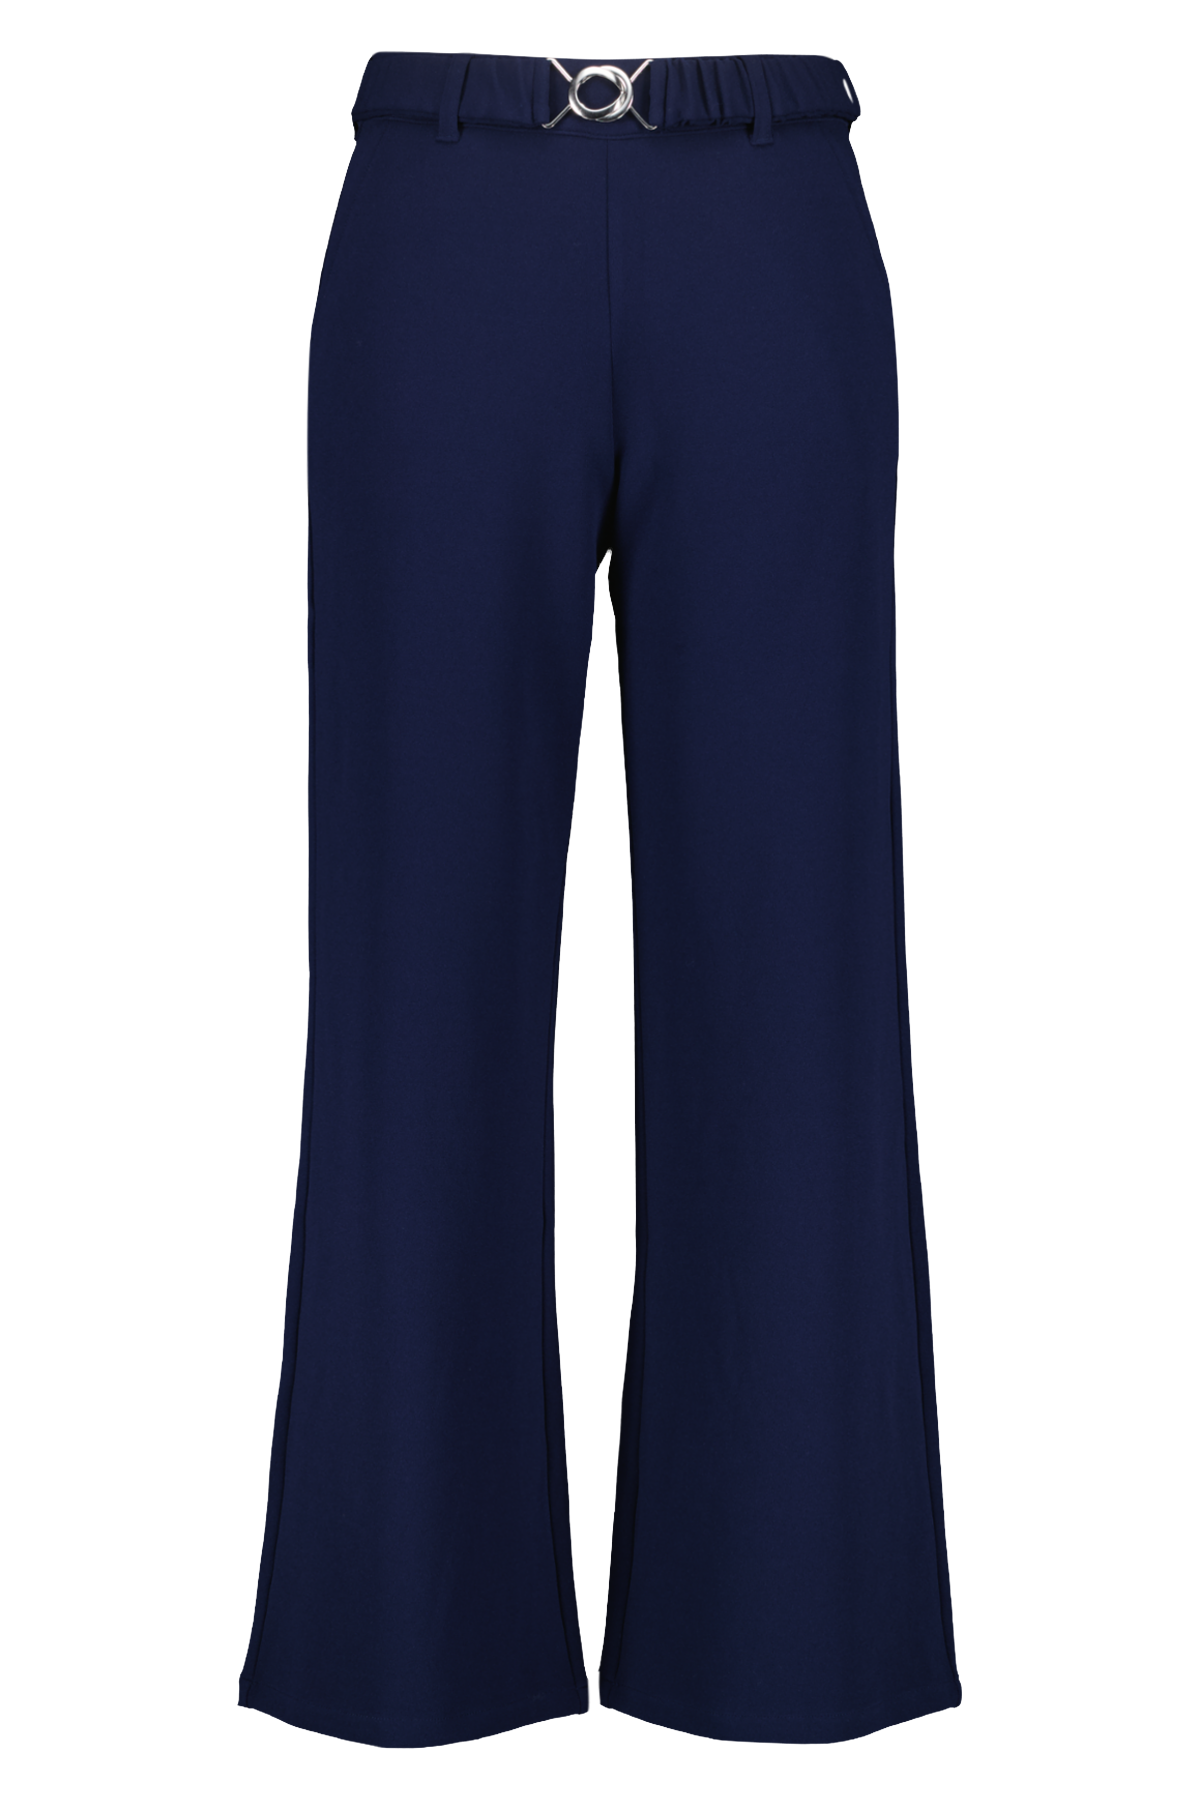 Damen Hose mit dazu passendem Gürtel Navyblau | MS Mode